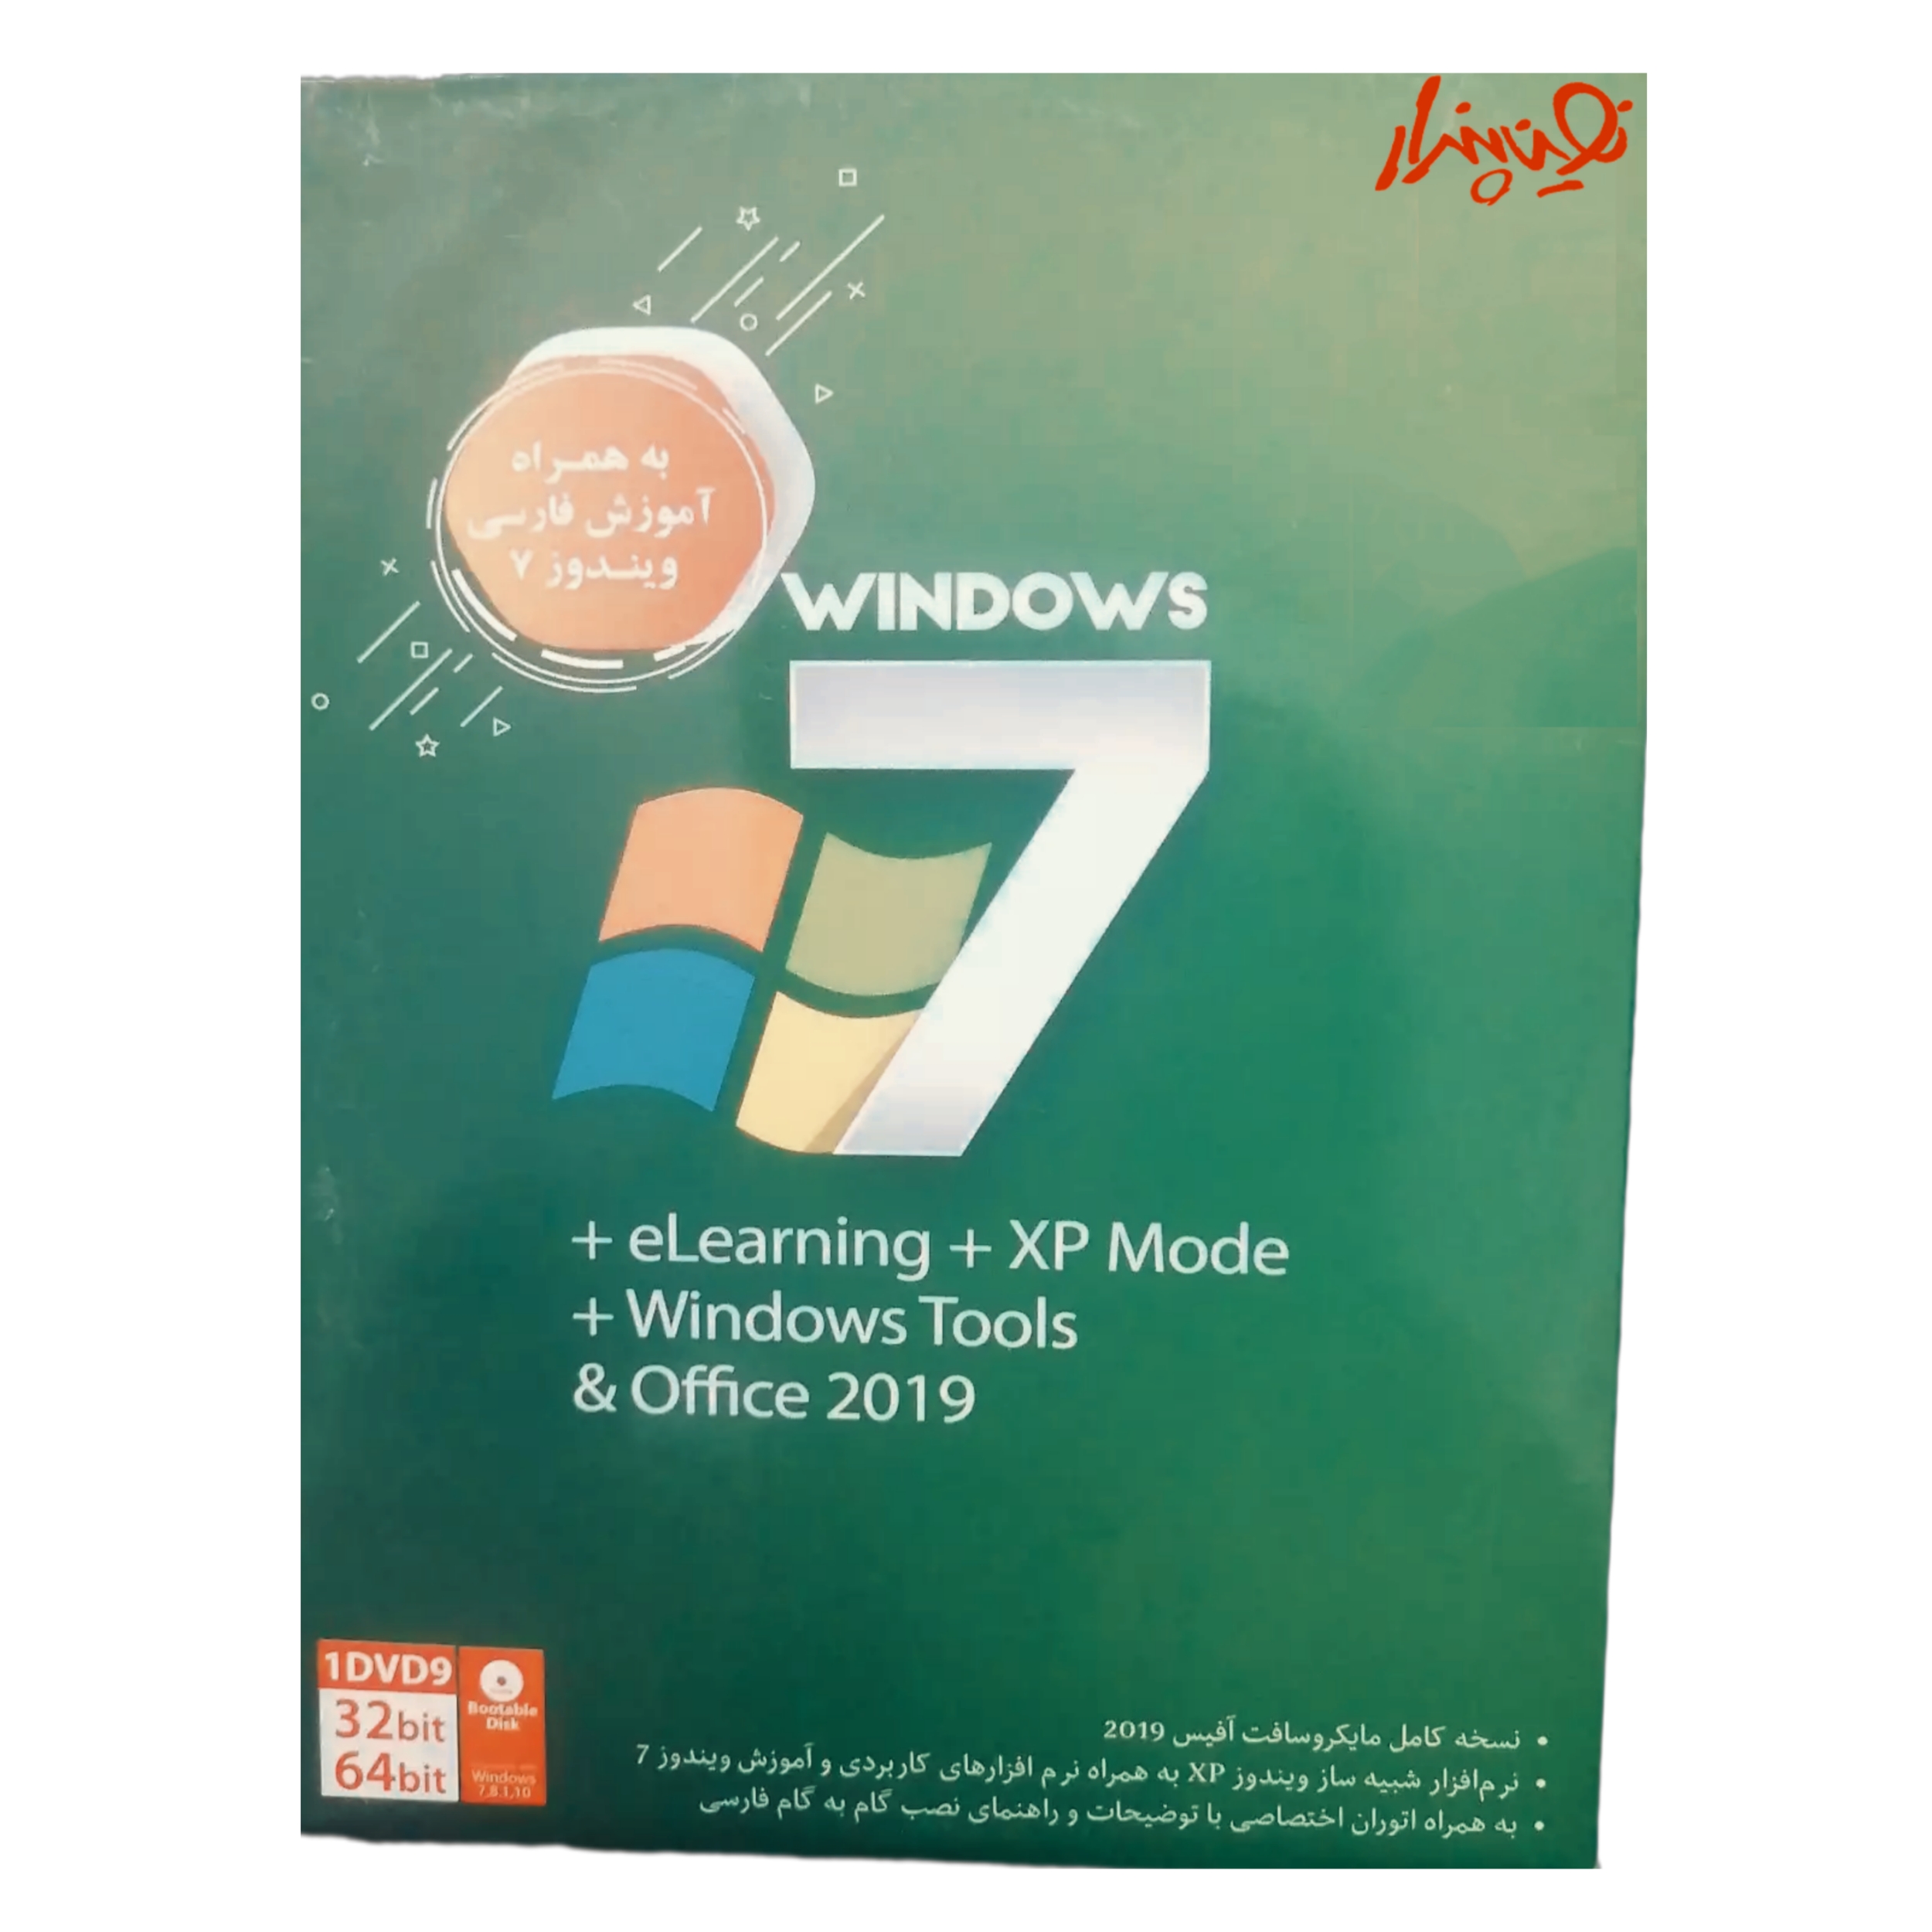 سیستم عامل Windows 7 + e-learning + XP MODE AND WINDOWS TOOLS + OFFICE 2019 نشر نوین پندار